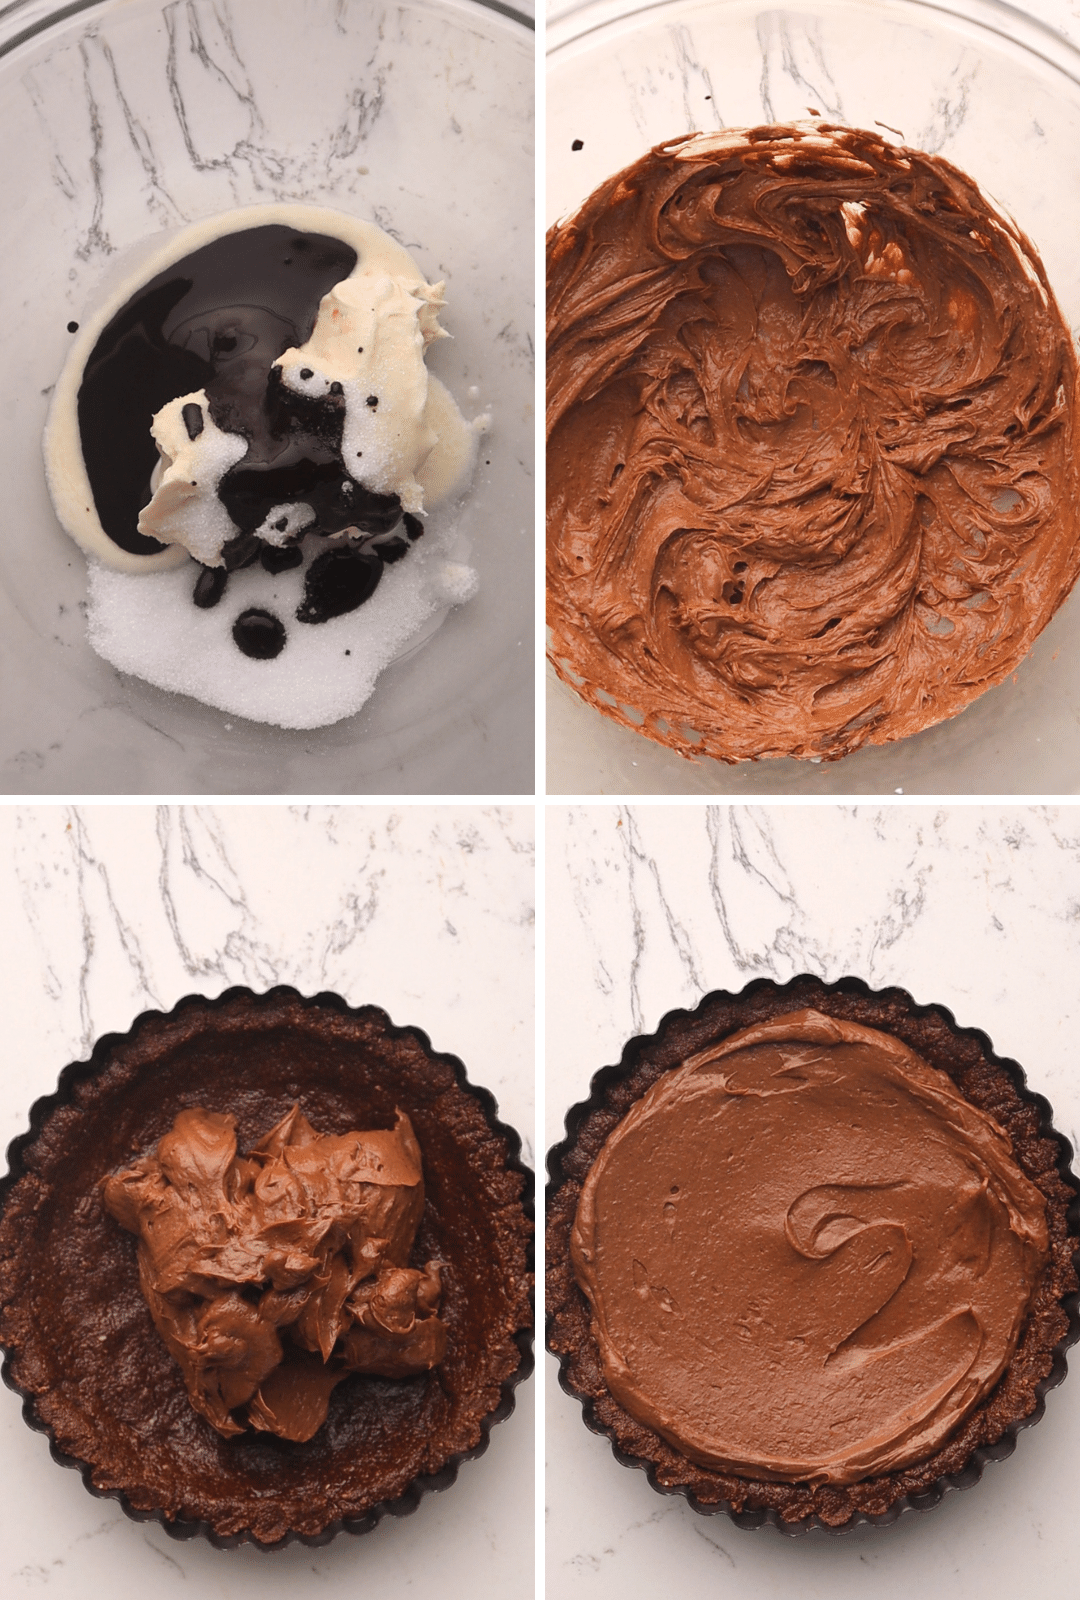 keto-chocolate-cheesecake-procedure-collage-thehealthcreative